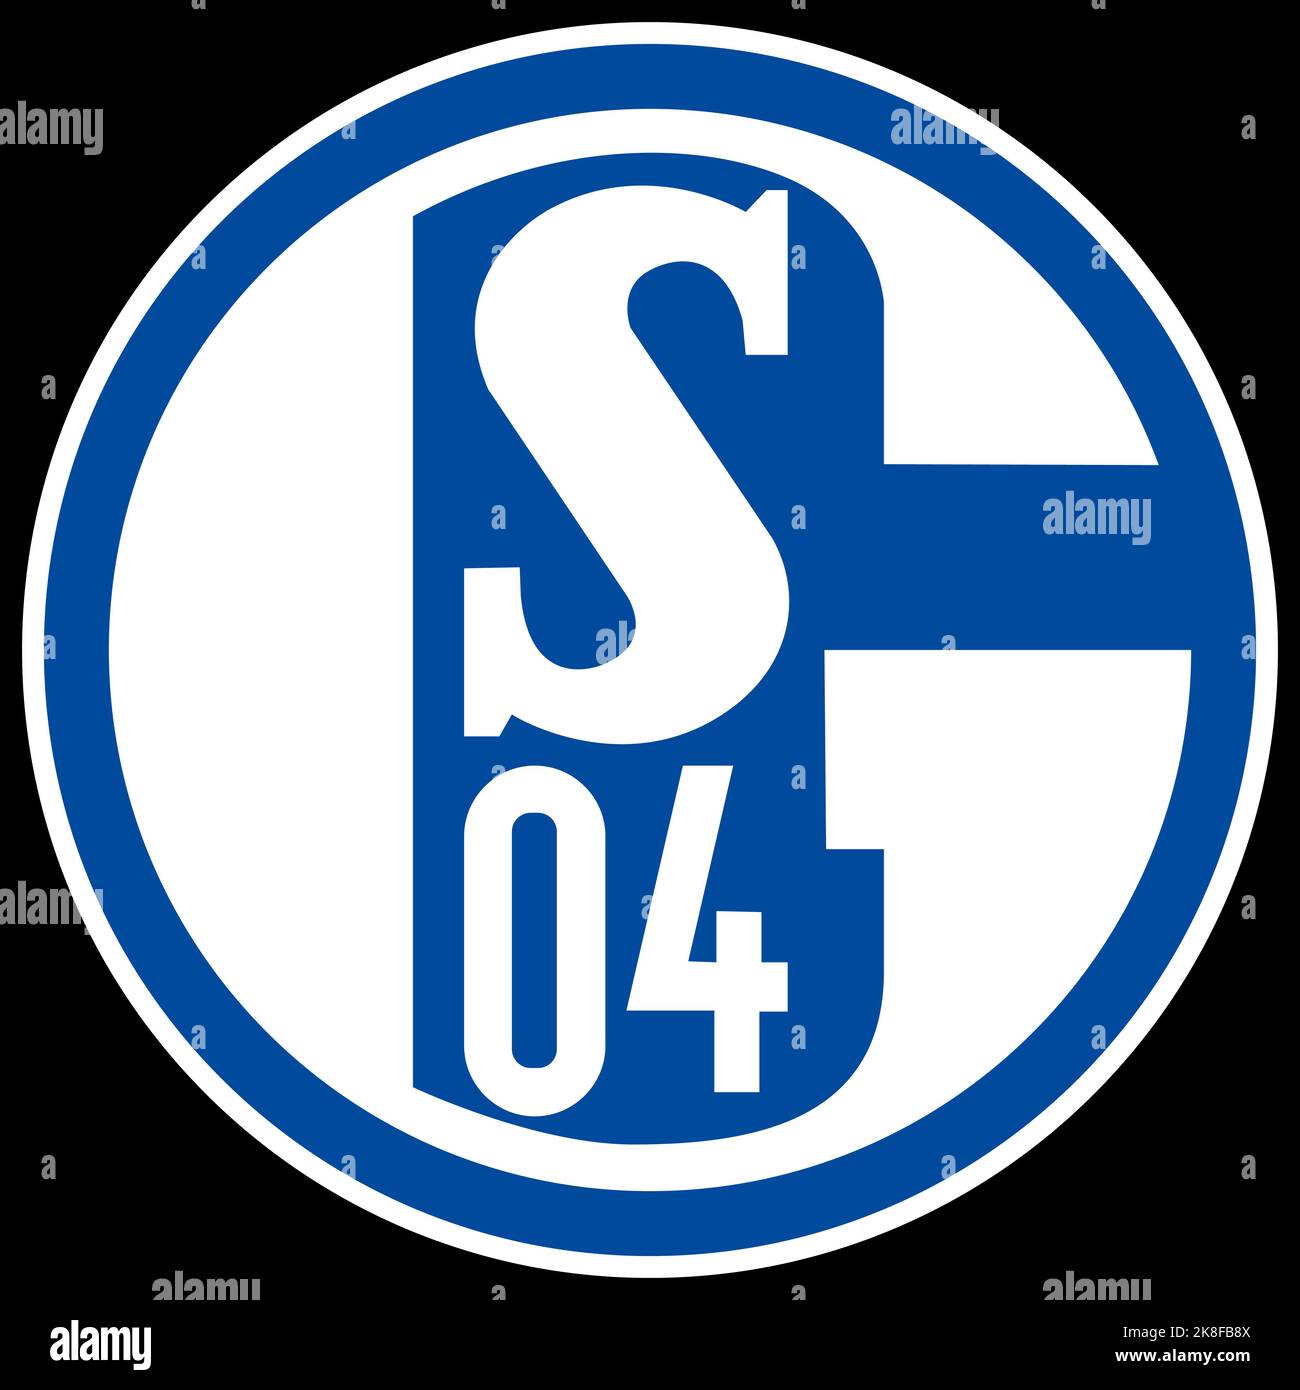 Frankfurt am Main, Germany - 10.23.2022 Logo of the German football club Schalke 04. Vector image Stock Vector